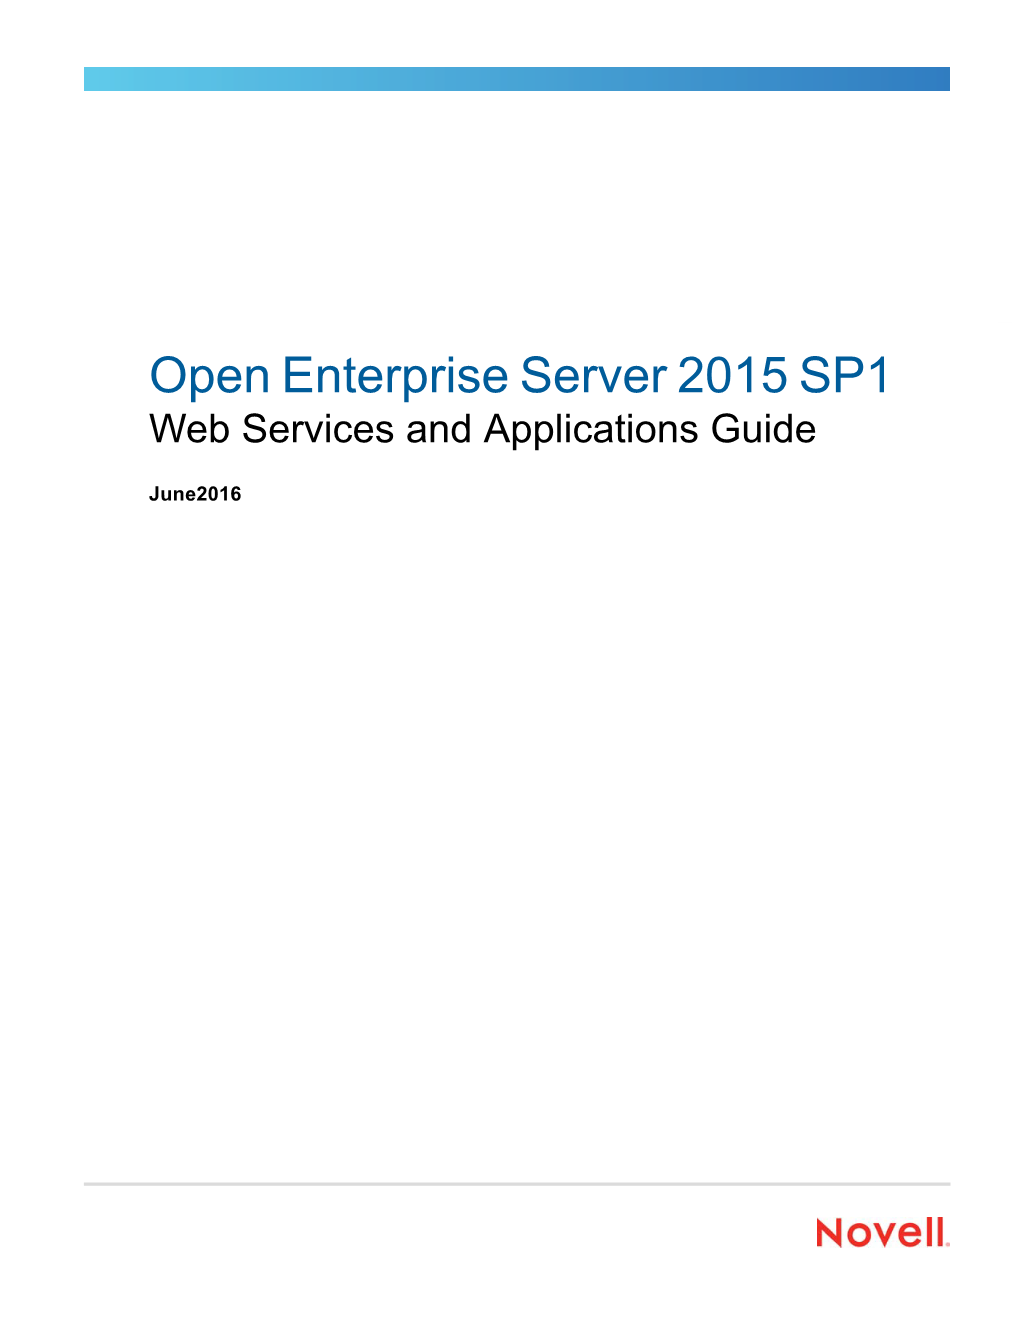 Open Enterprise Server 2015 SP1 Web Services and Applications Guide